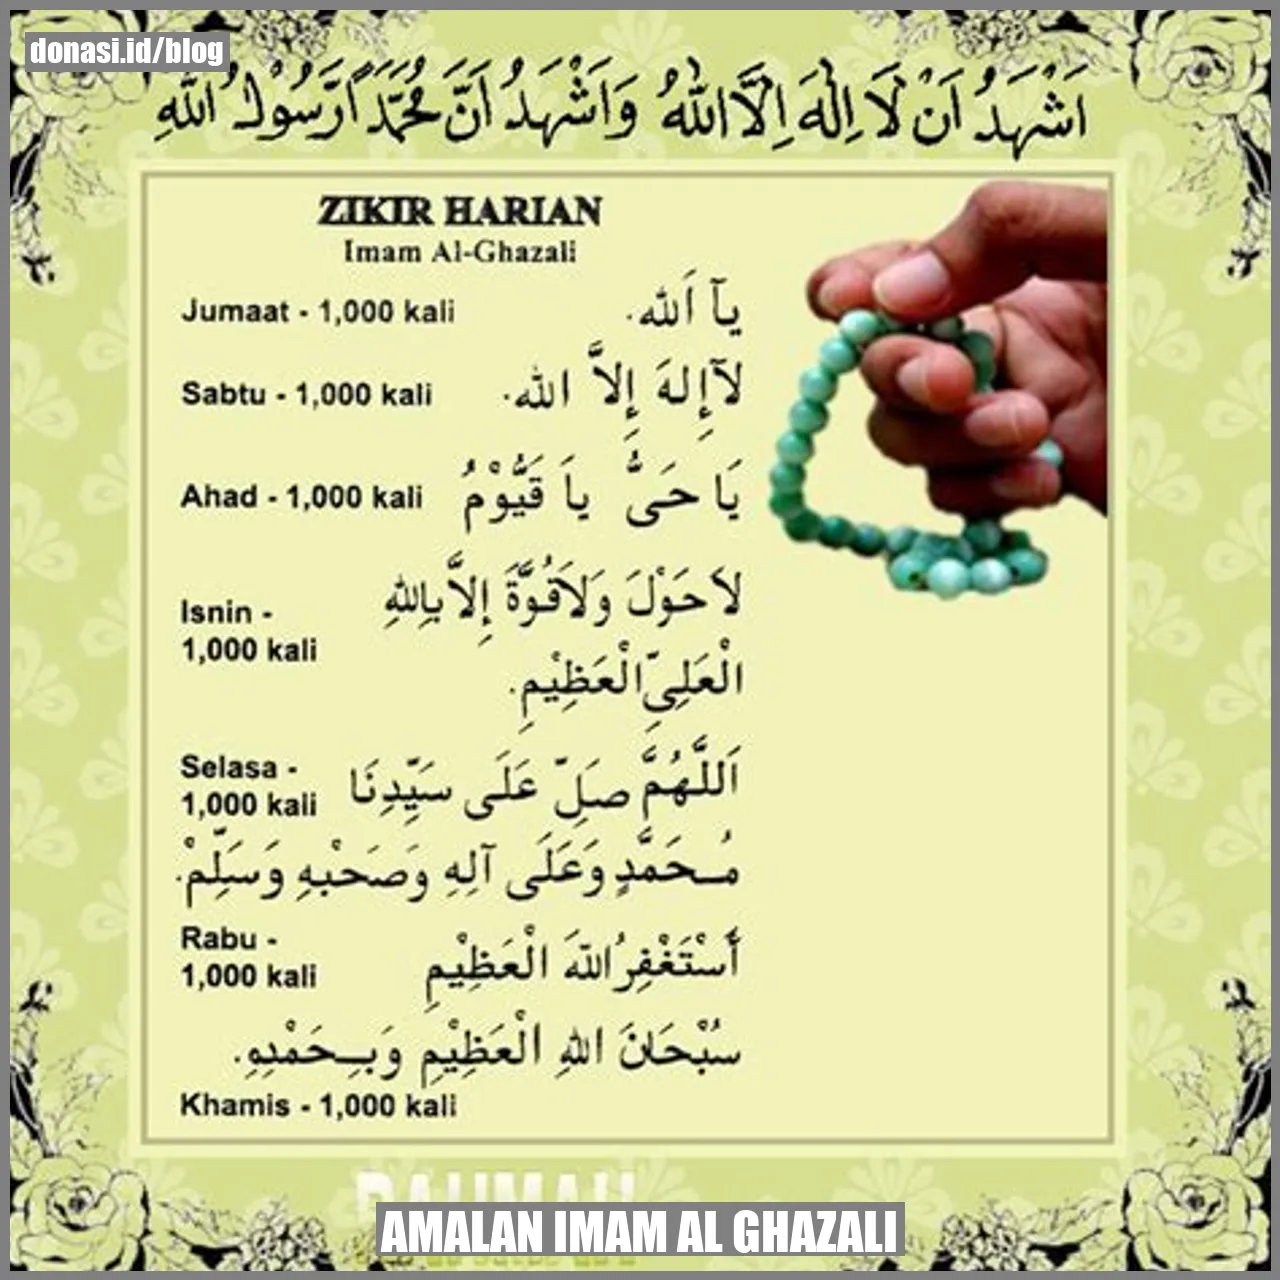 Amalan Imam Al Ghazali – Donasi ID